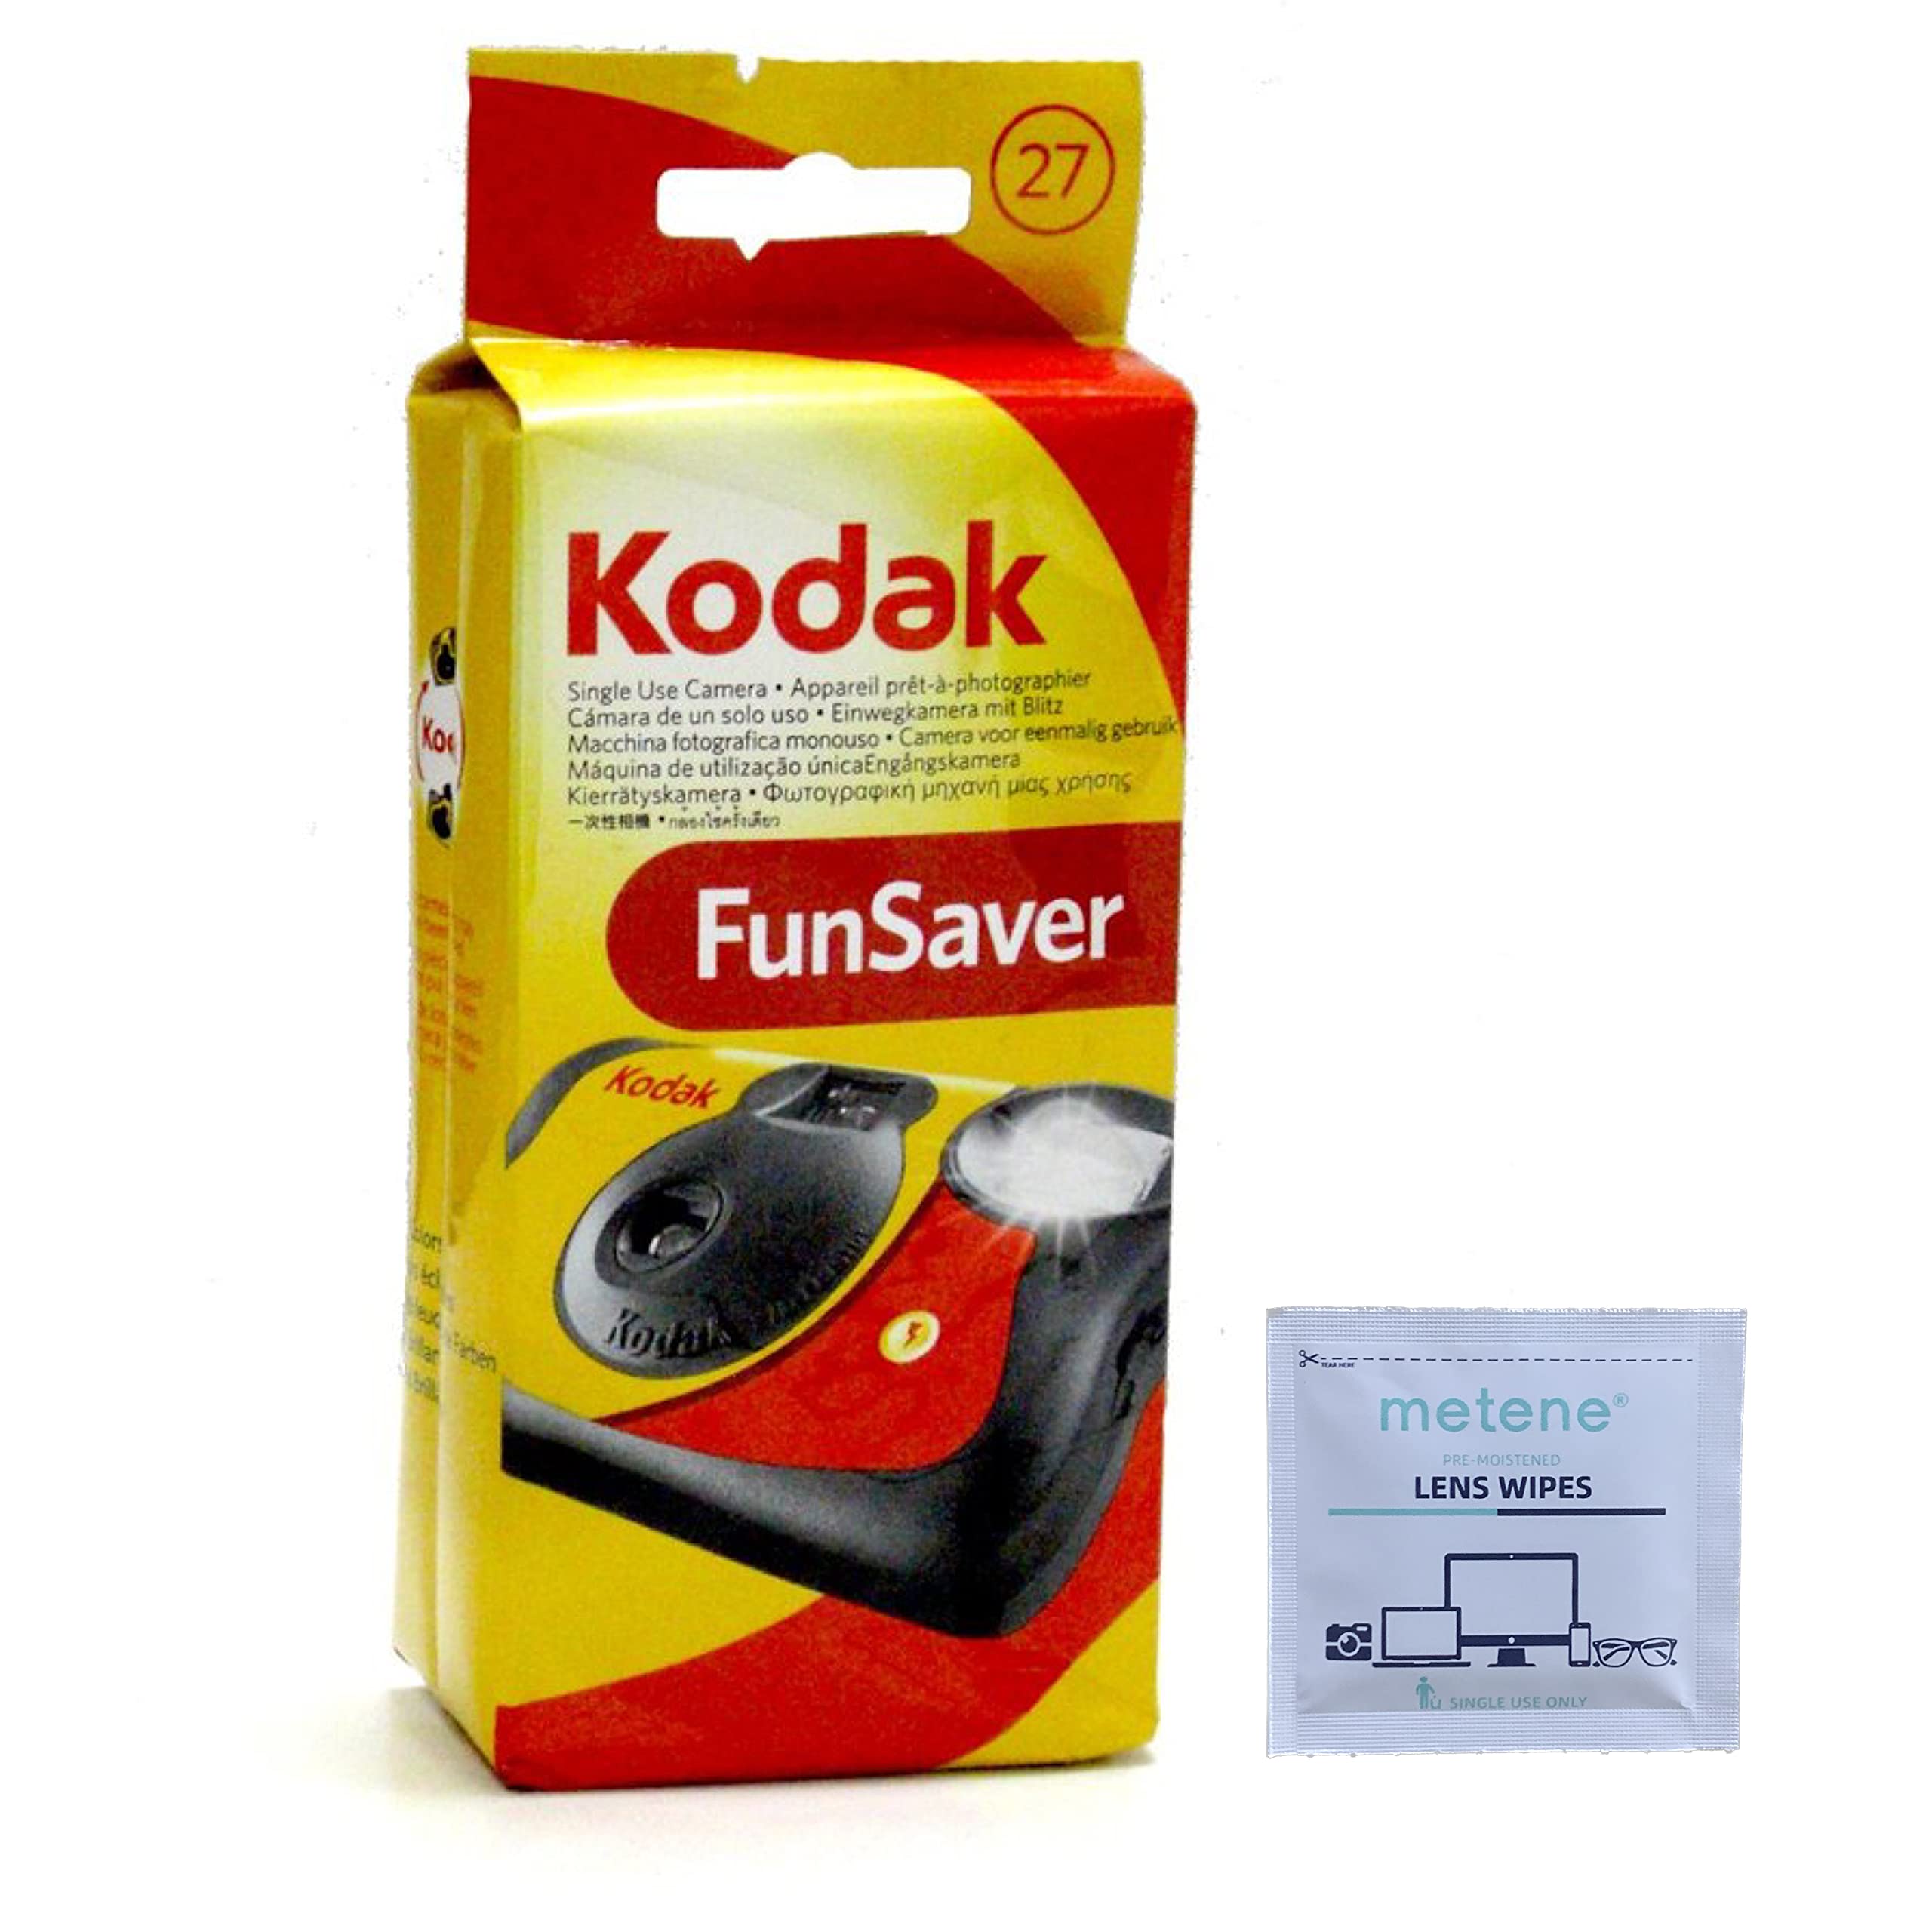 Kodak फन सेवर सिंगल यूज़ कैमरा (6-पैक) बंडल (6 आइटम)...